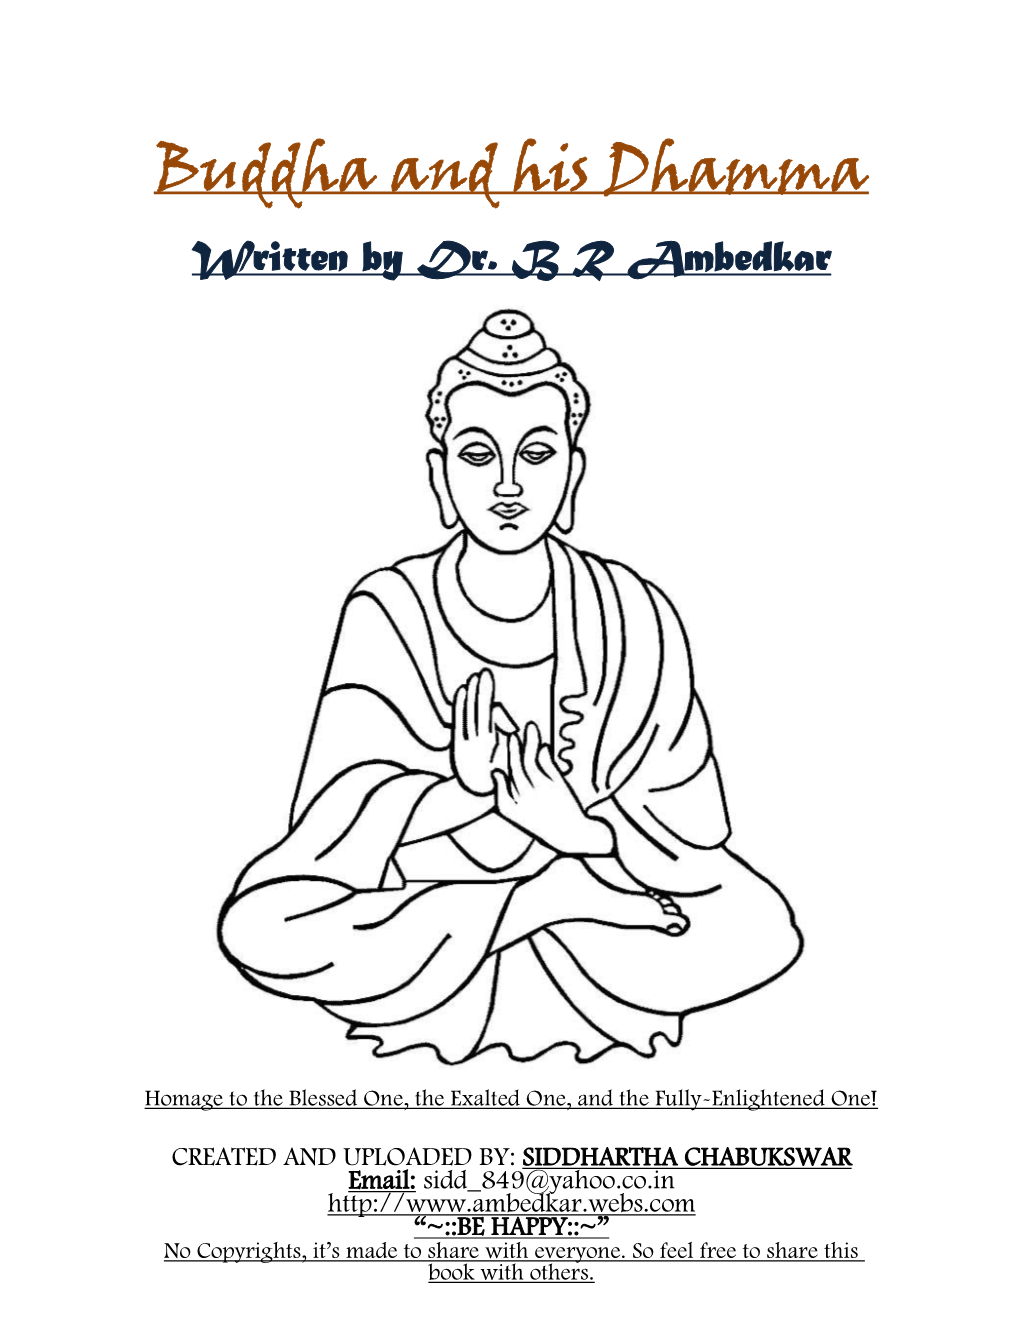 Buddha and His Dhamma by B R Ambedkar